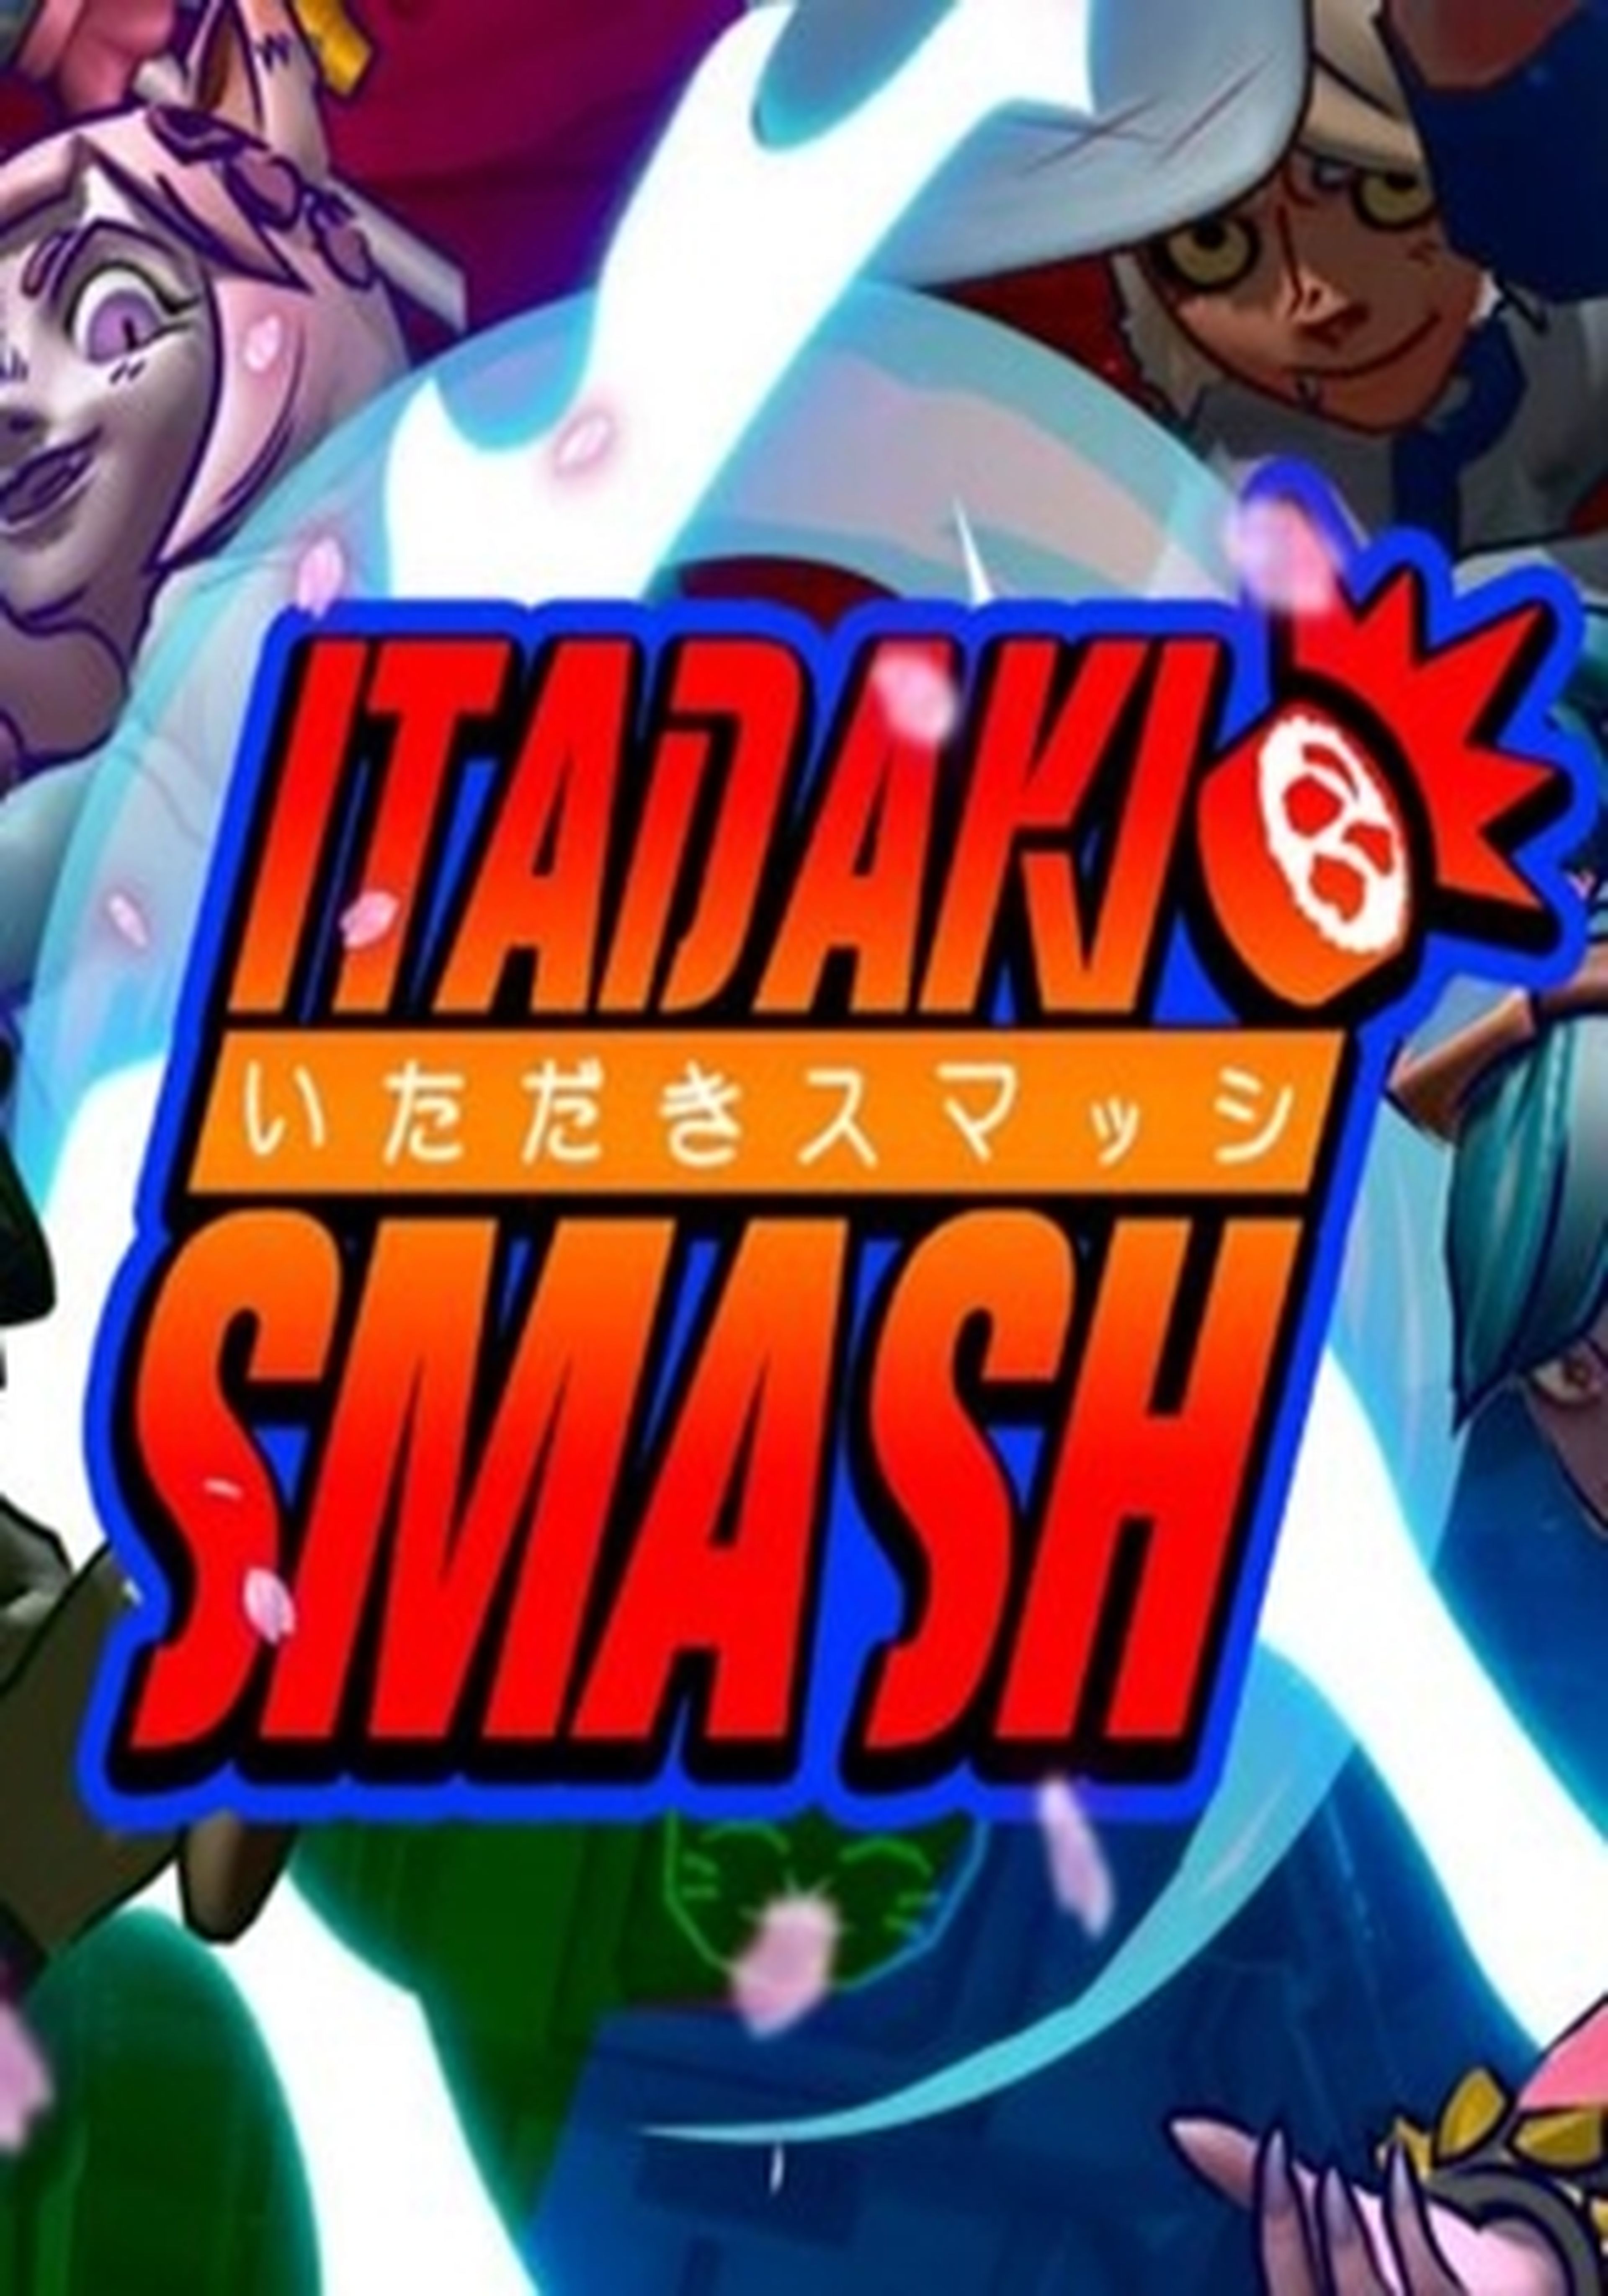 Itadaki Smash cartel